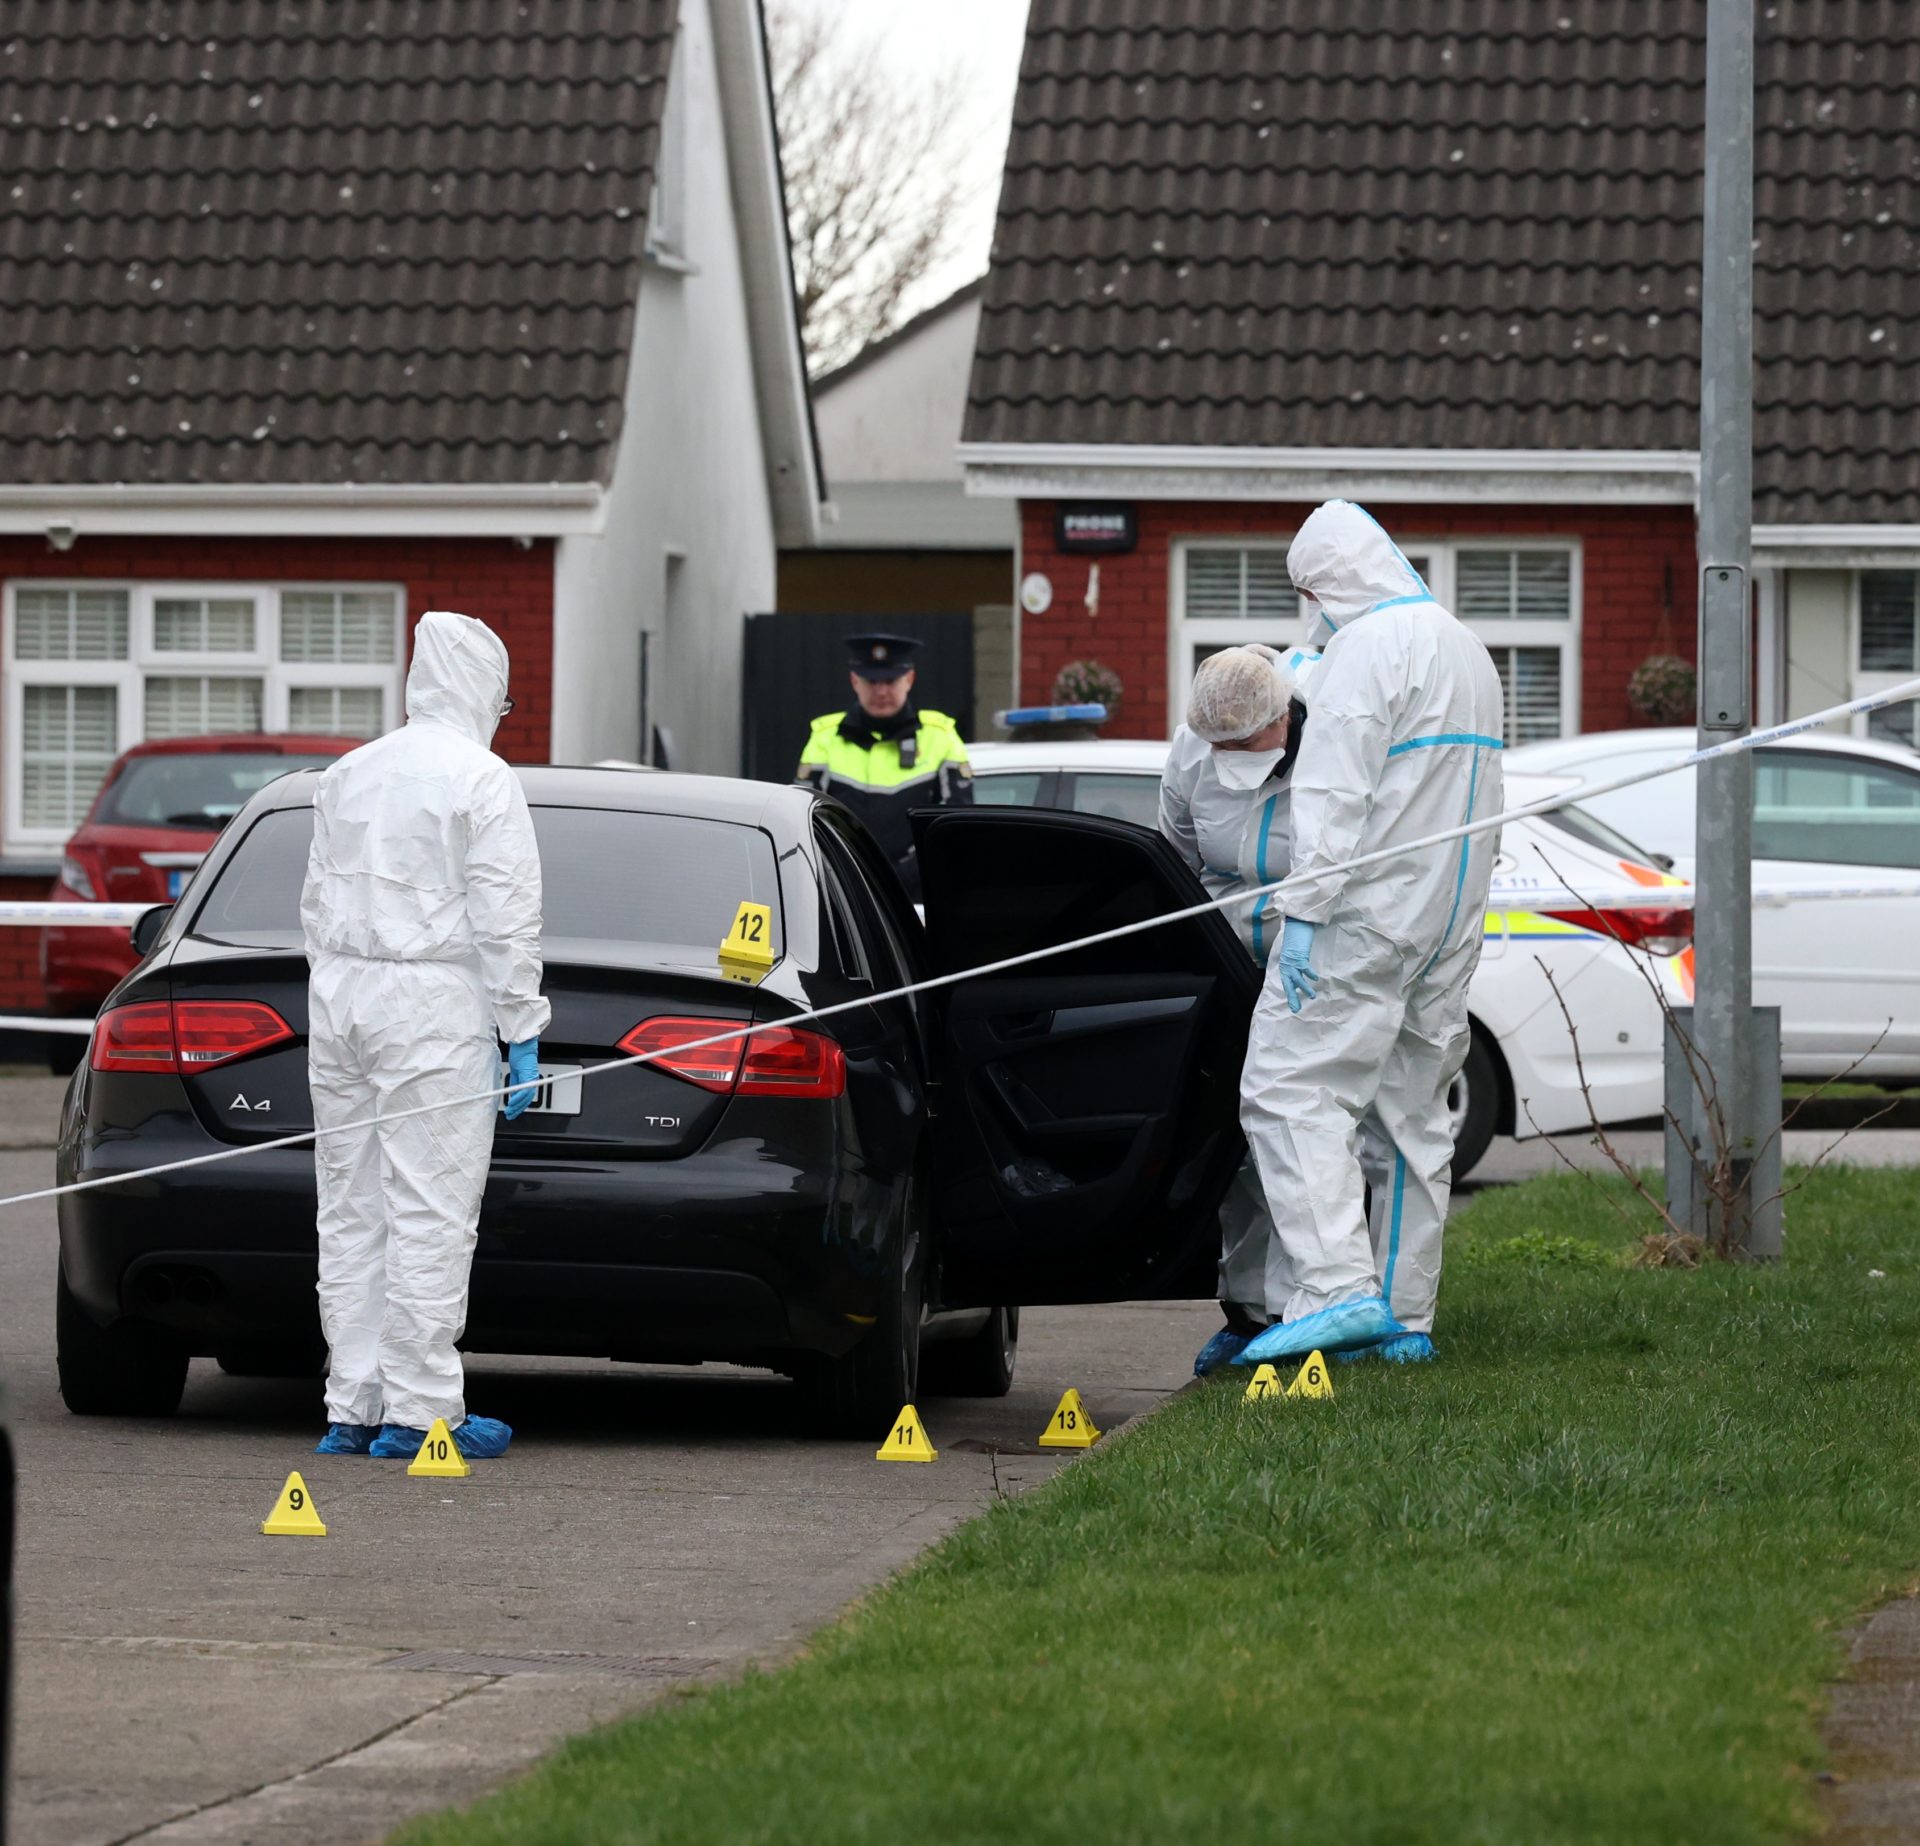 Garda forensics teams at the scene in Swords, Co Dublin on February 24th 2023.